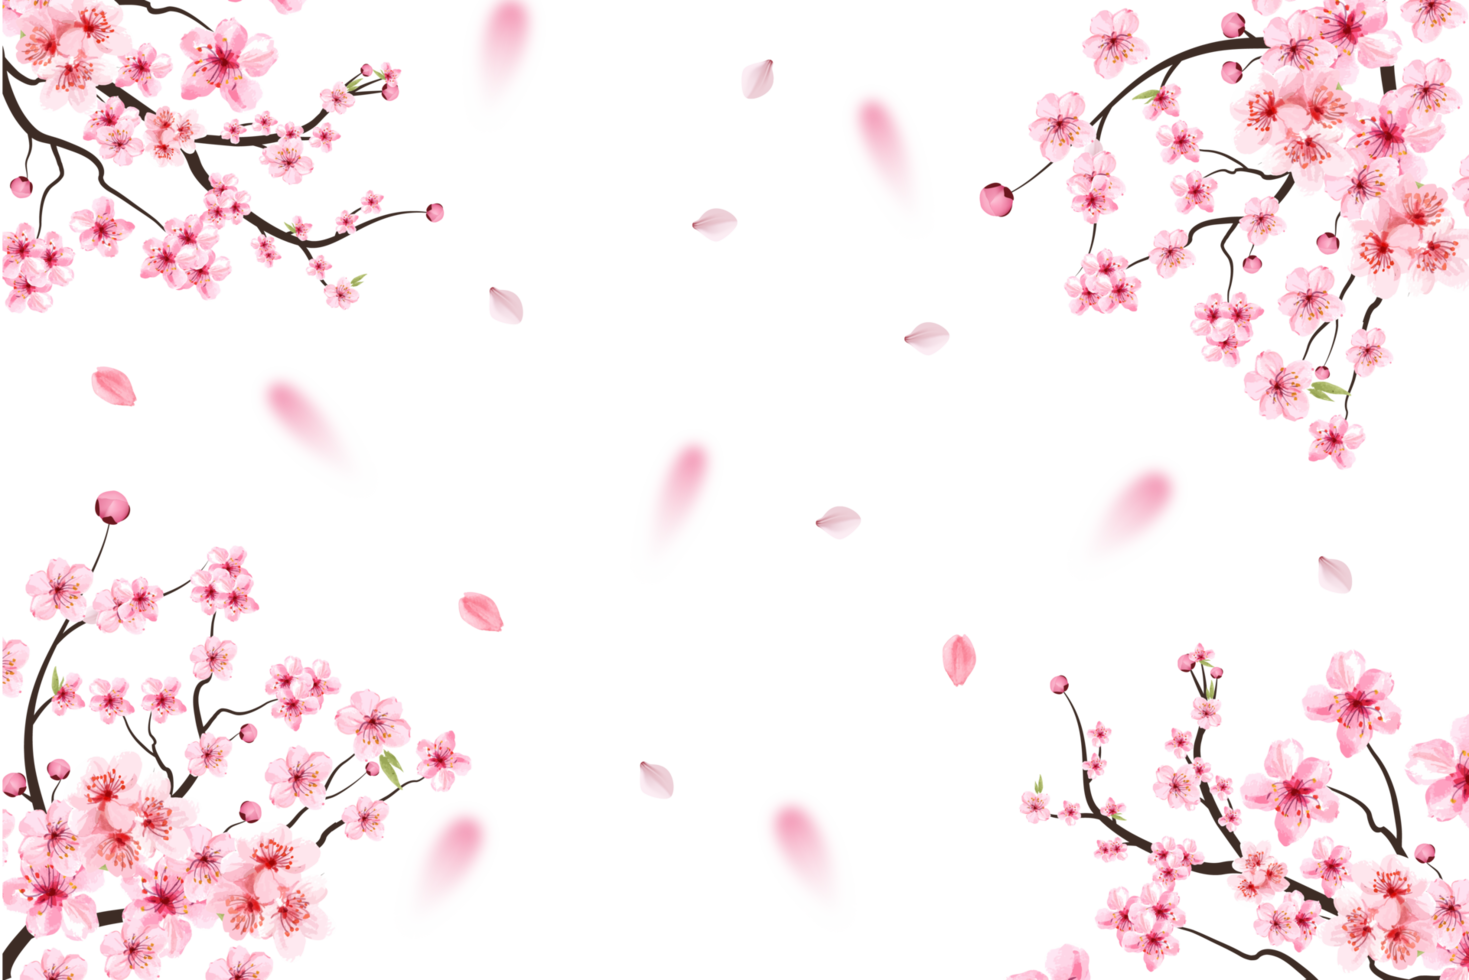 Cerise fleur avec rose Sakura fleur png. rose Sakura feuille chute. Sakura branche avec épanouissement aquarelle fleur. Cerise fleur feuilles chute. Japonais Cerise fleur png. png